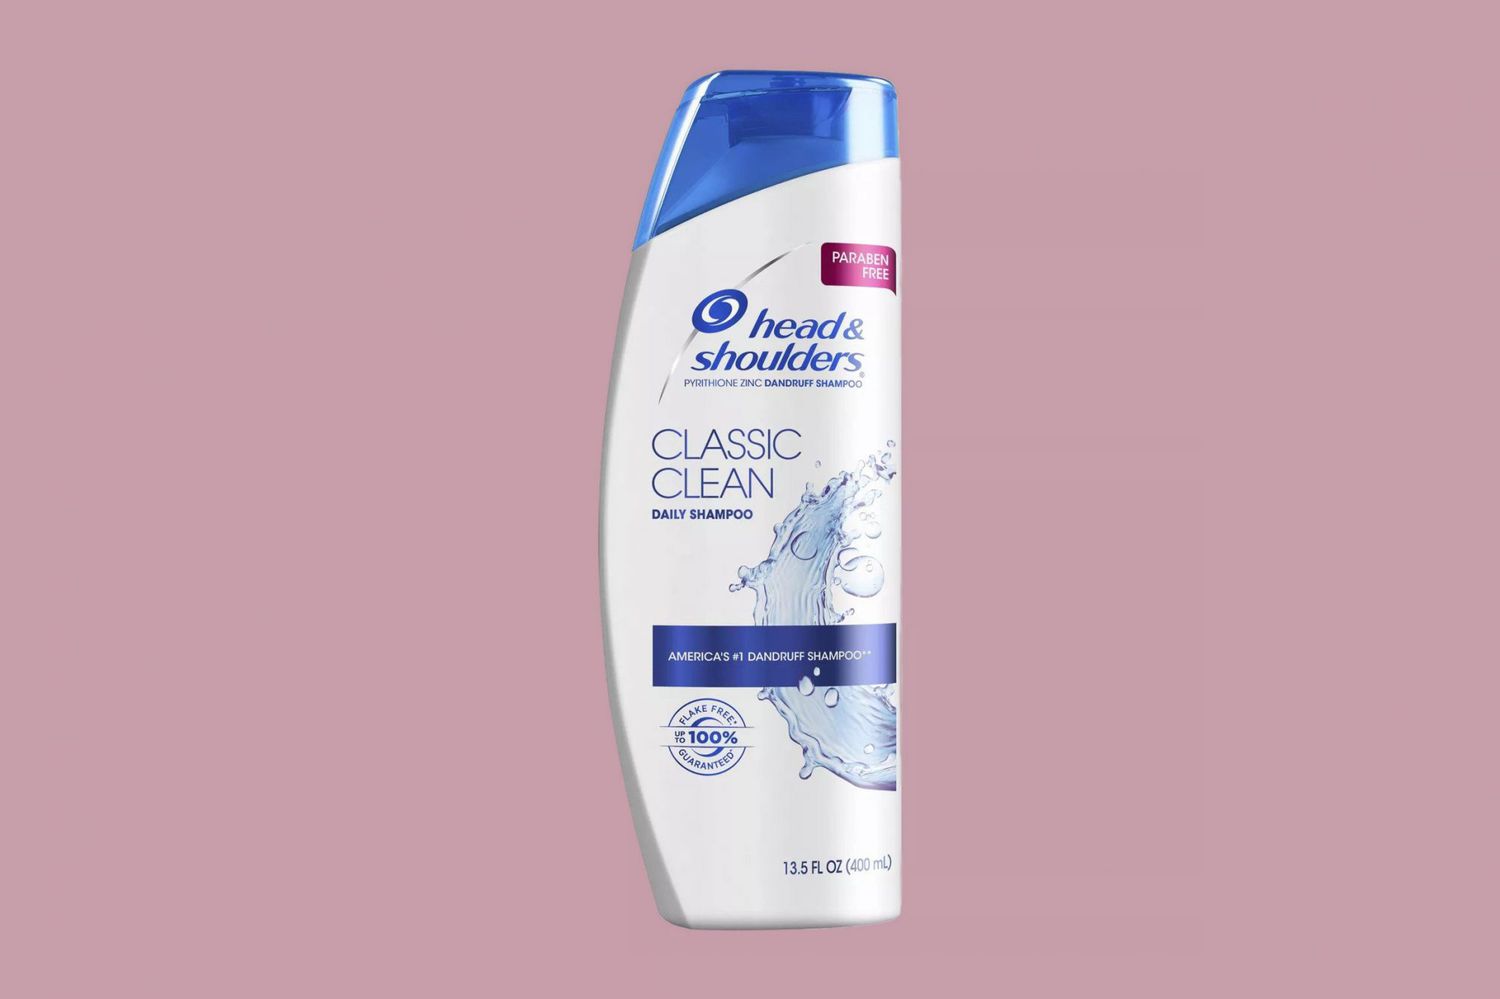 Head & Shoulders Classic Clean Daily-Use Anti-Dandruff Shampoo